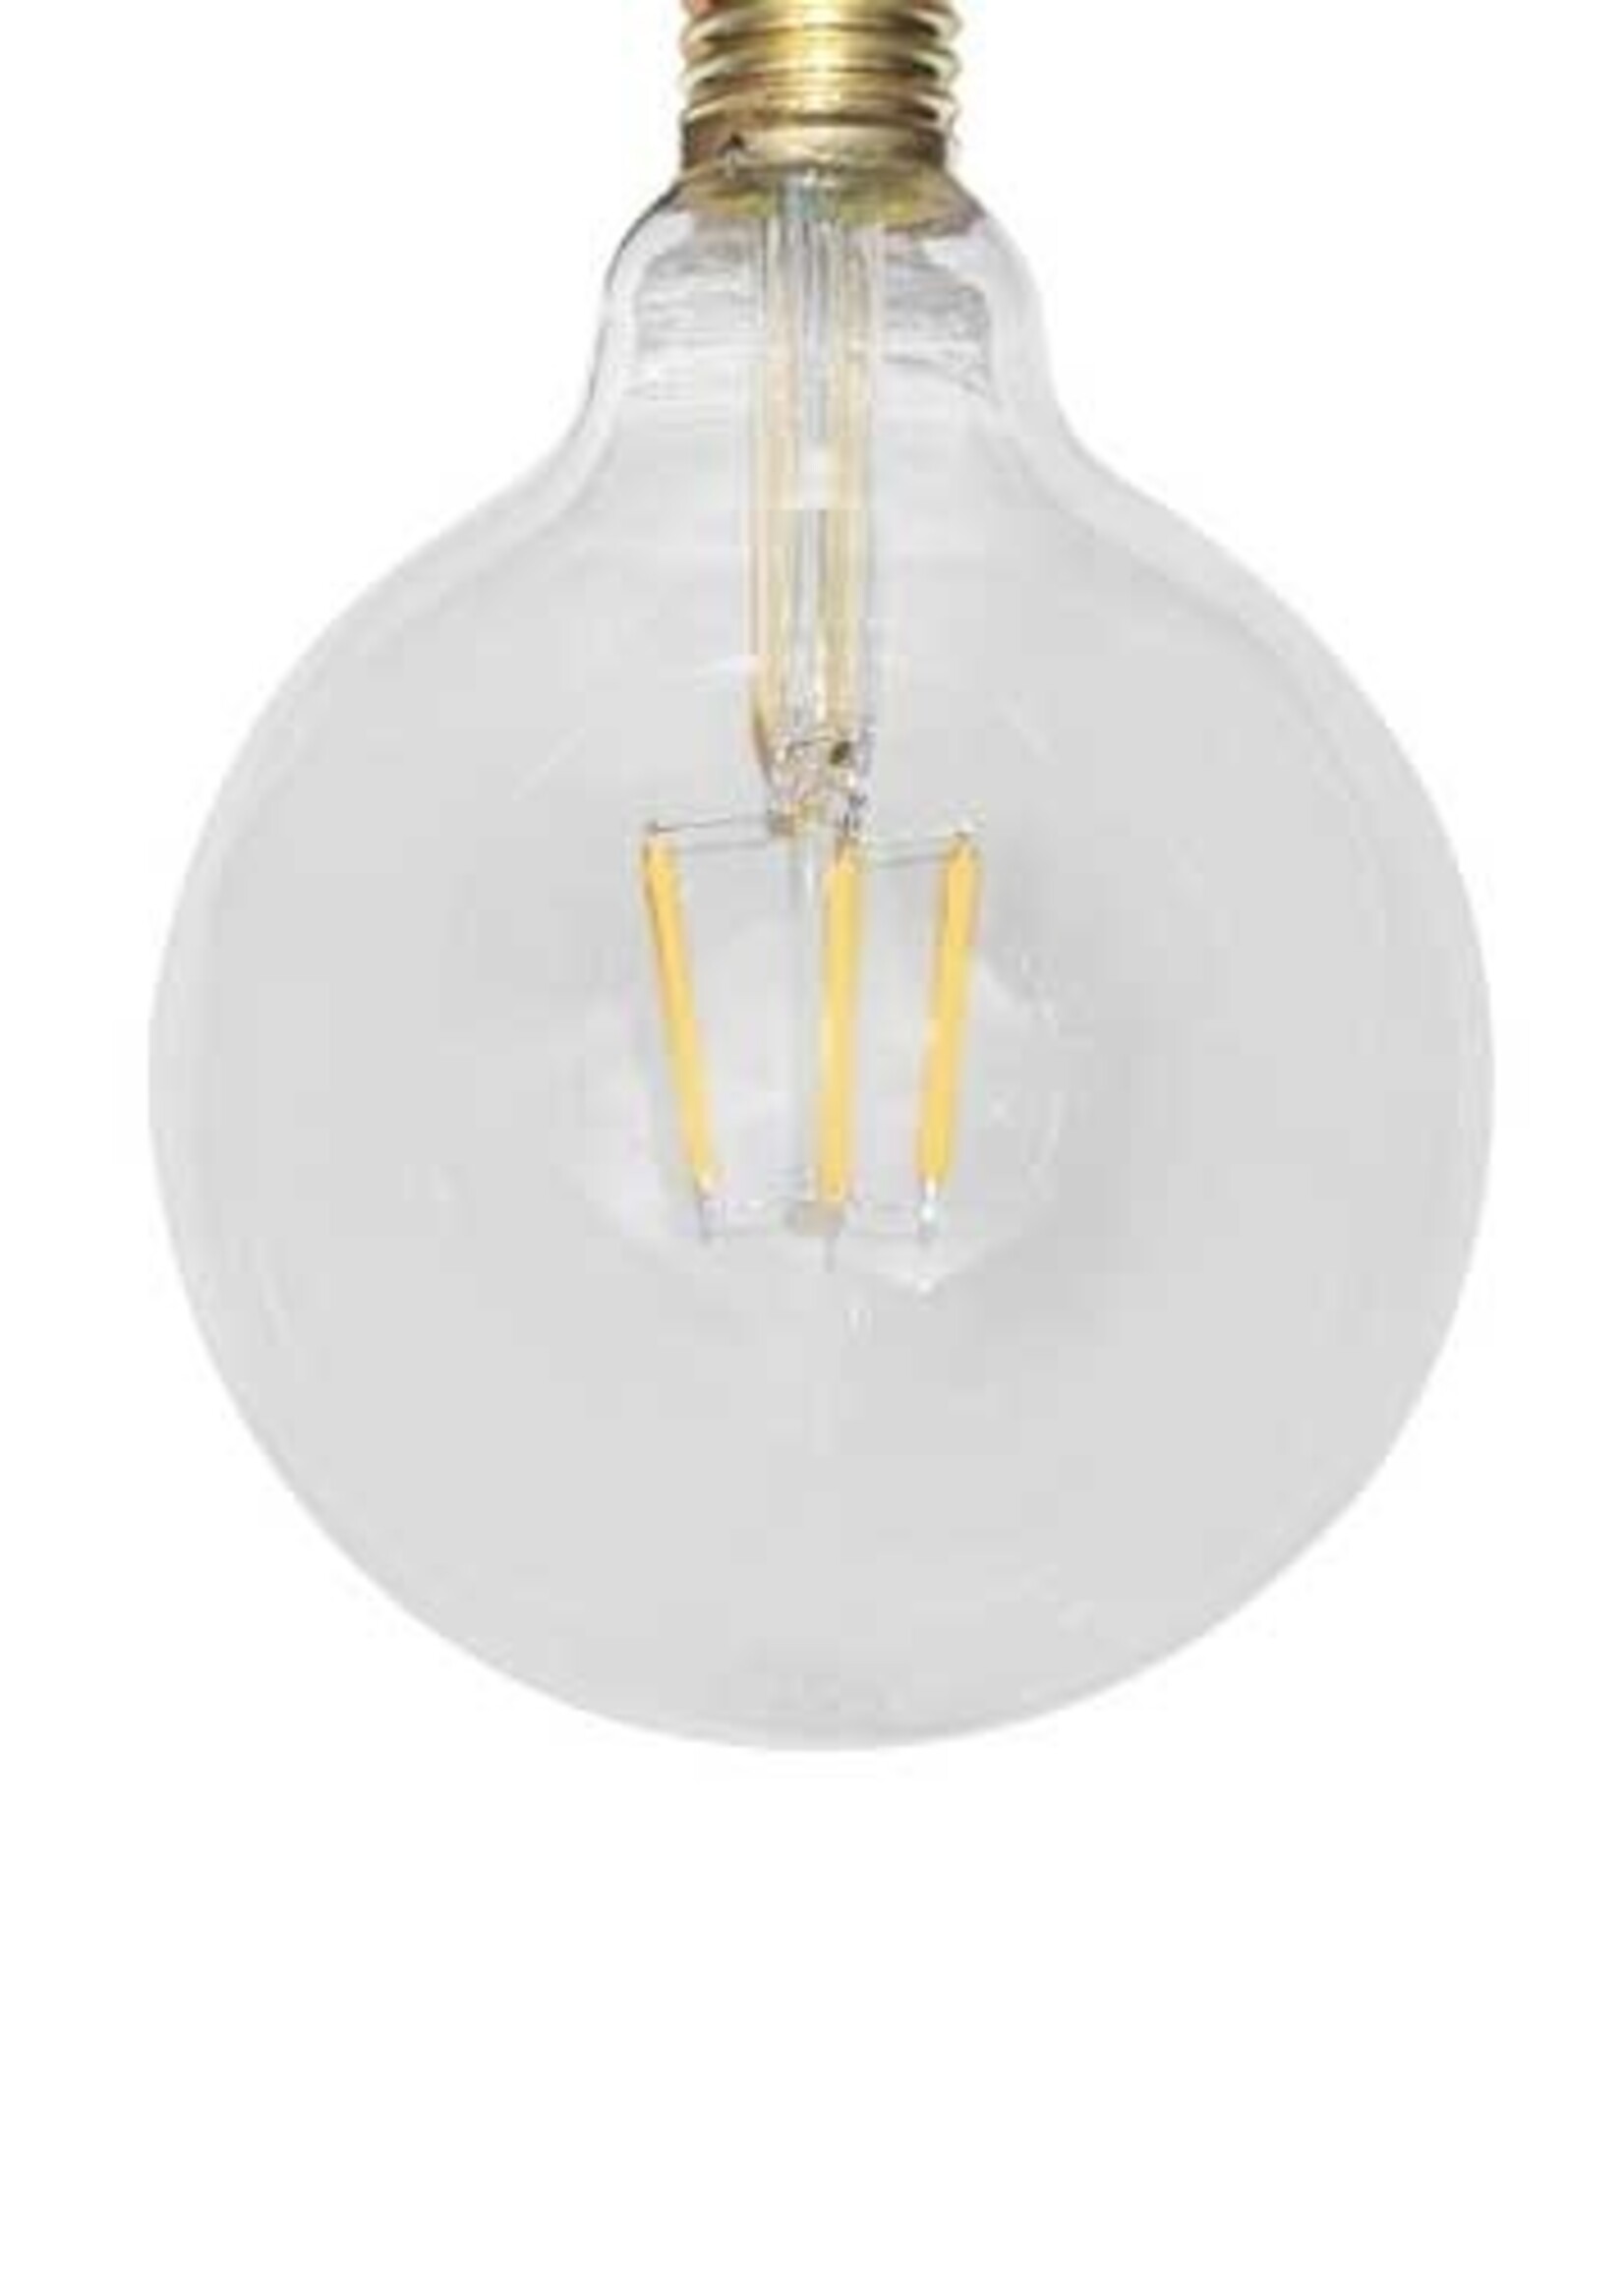 LEDWINKEL-Online E27 LED Lamp filament G125 6W 2200K extra warm white dimmable